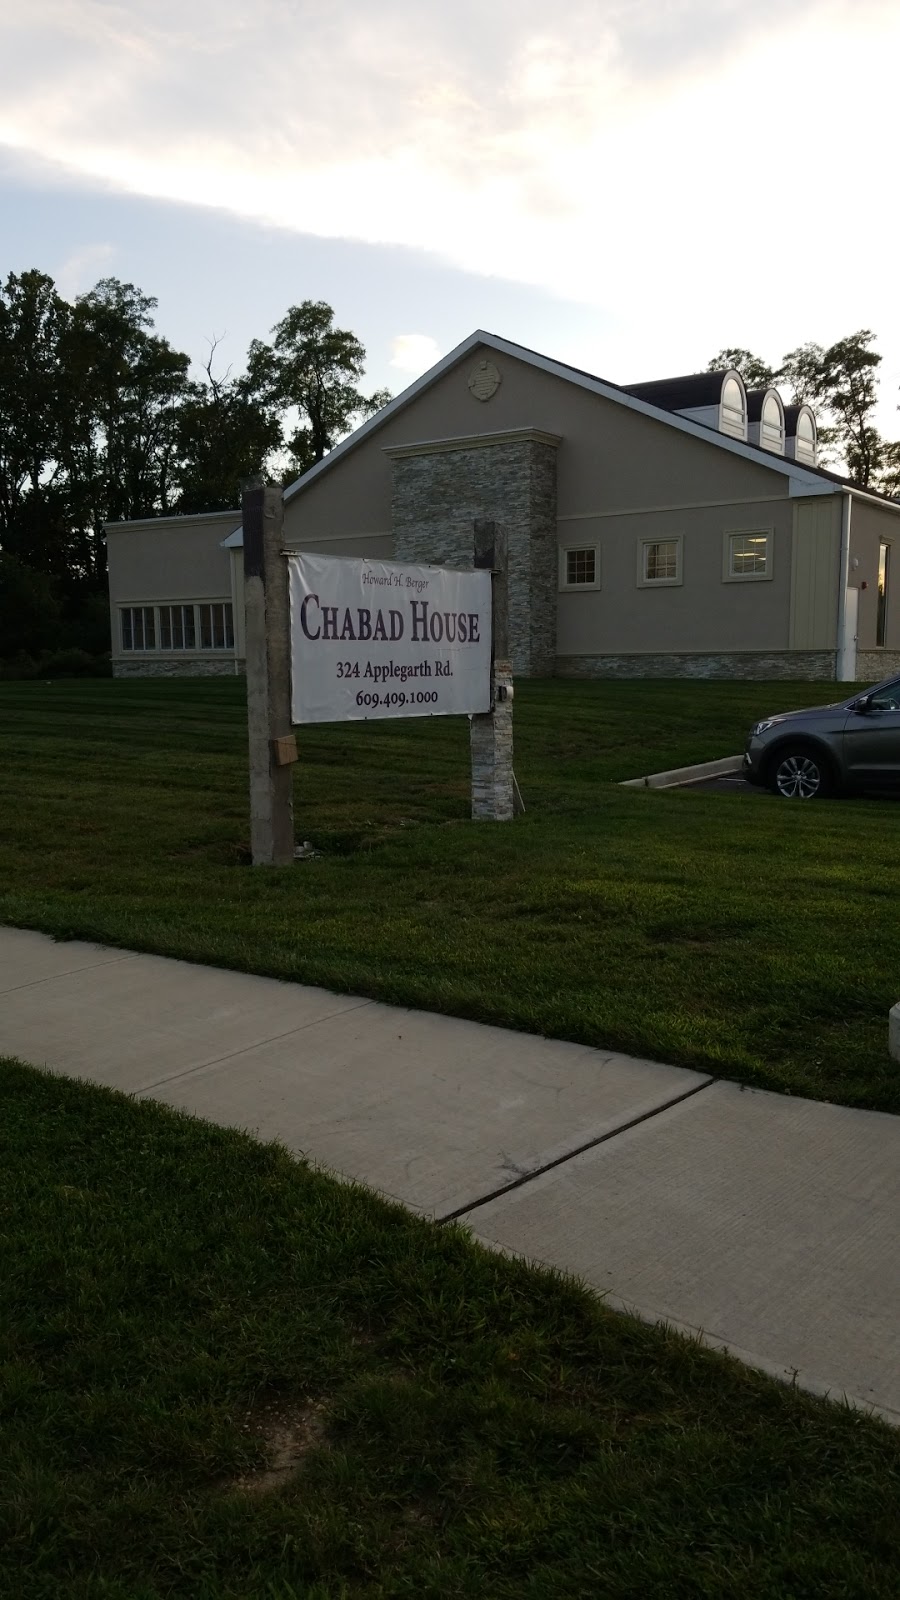 Chabad House of Monroe | 324 Applegarth Rd, Monroe Township, NJ 08831 | Phone: (609) 409-1000